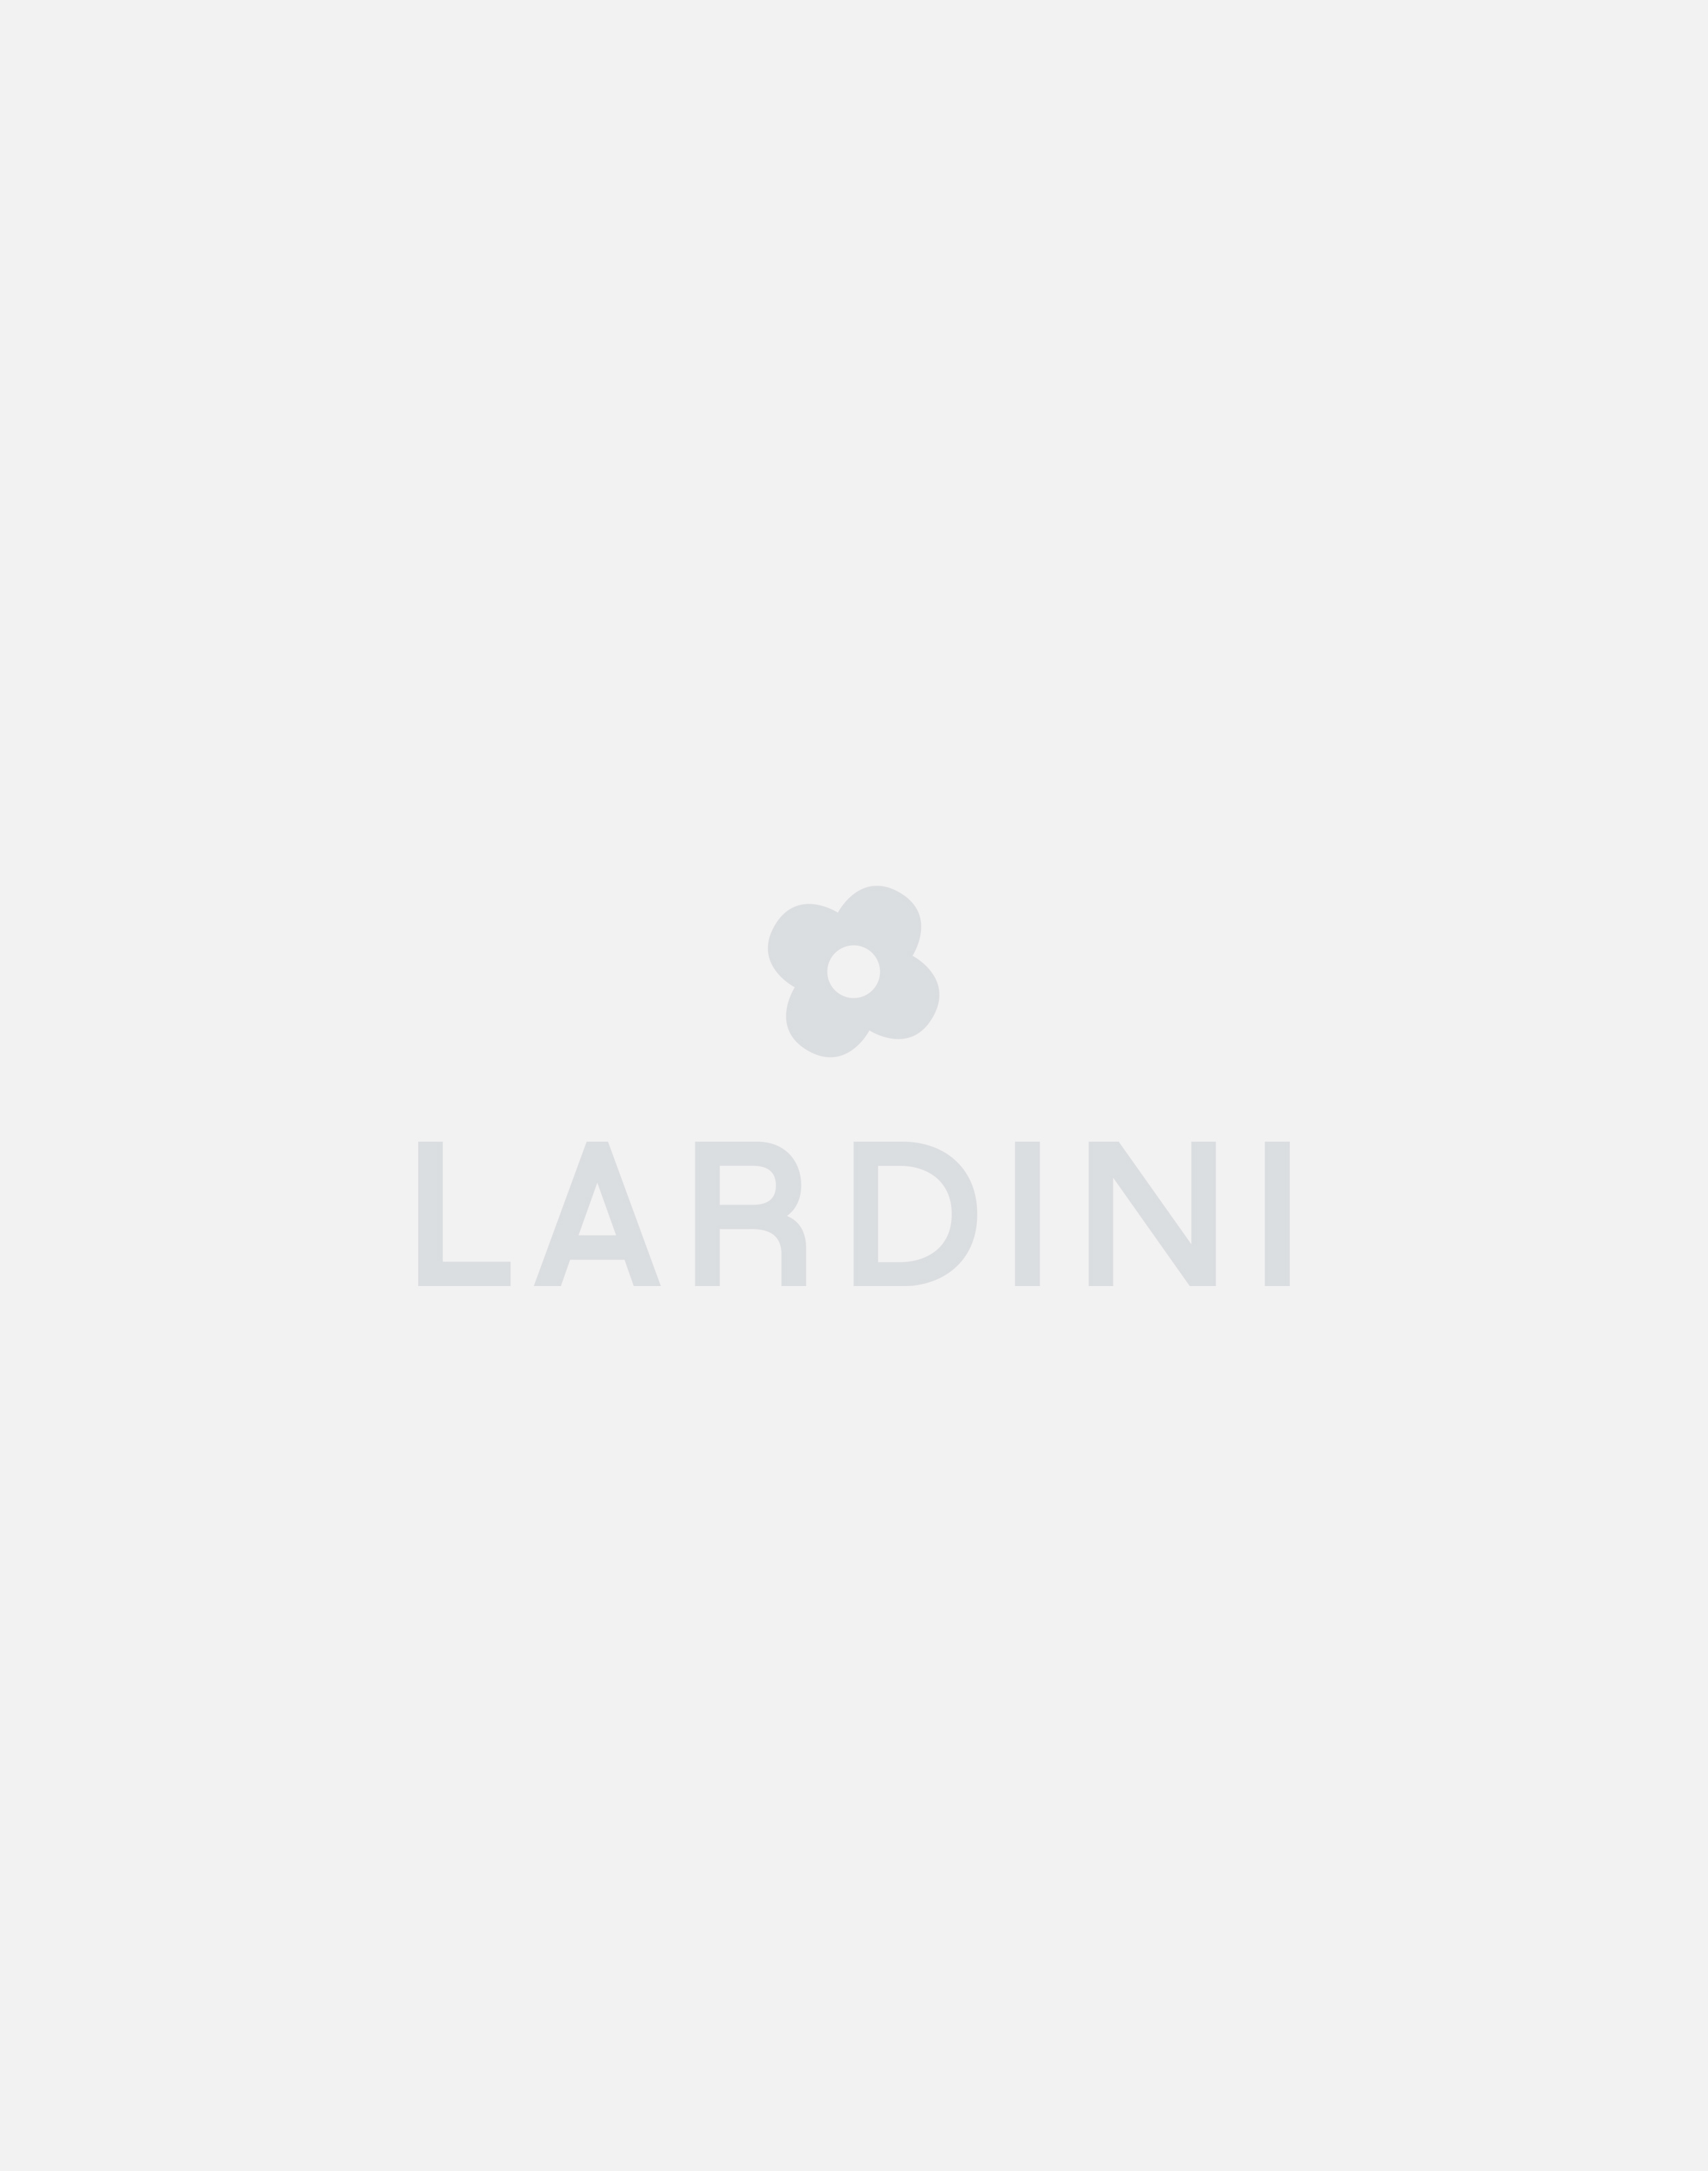 White V-neck sweater - Luigi Lardini capsule 3